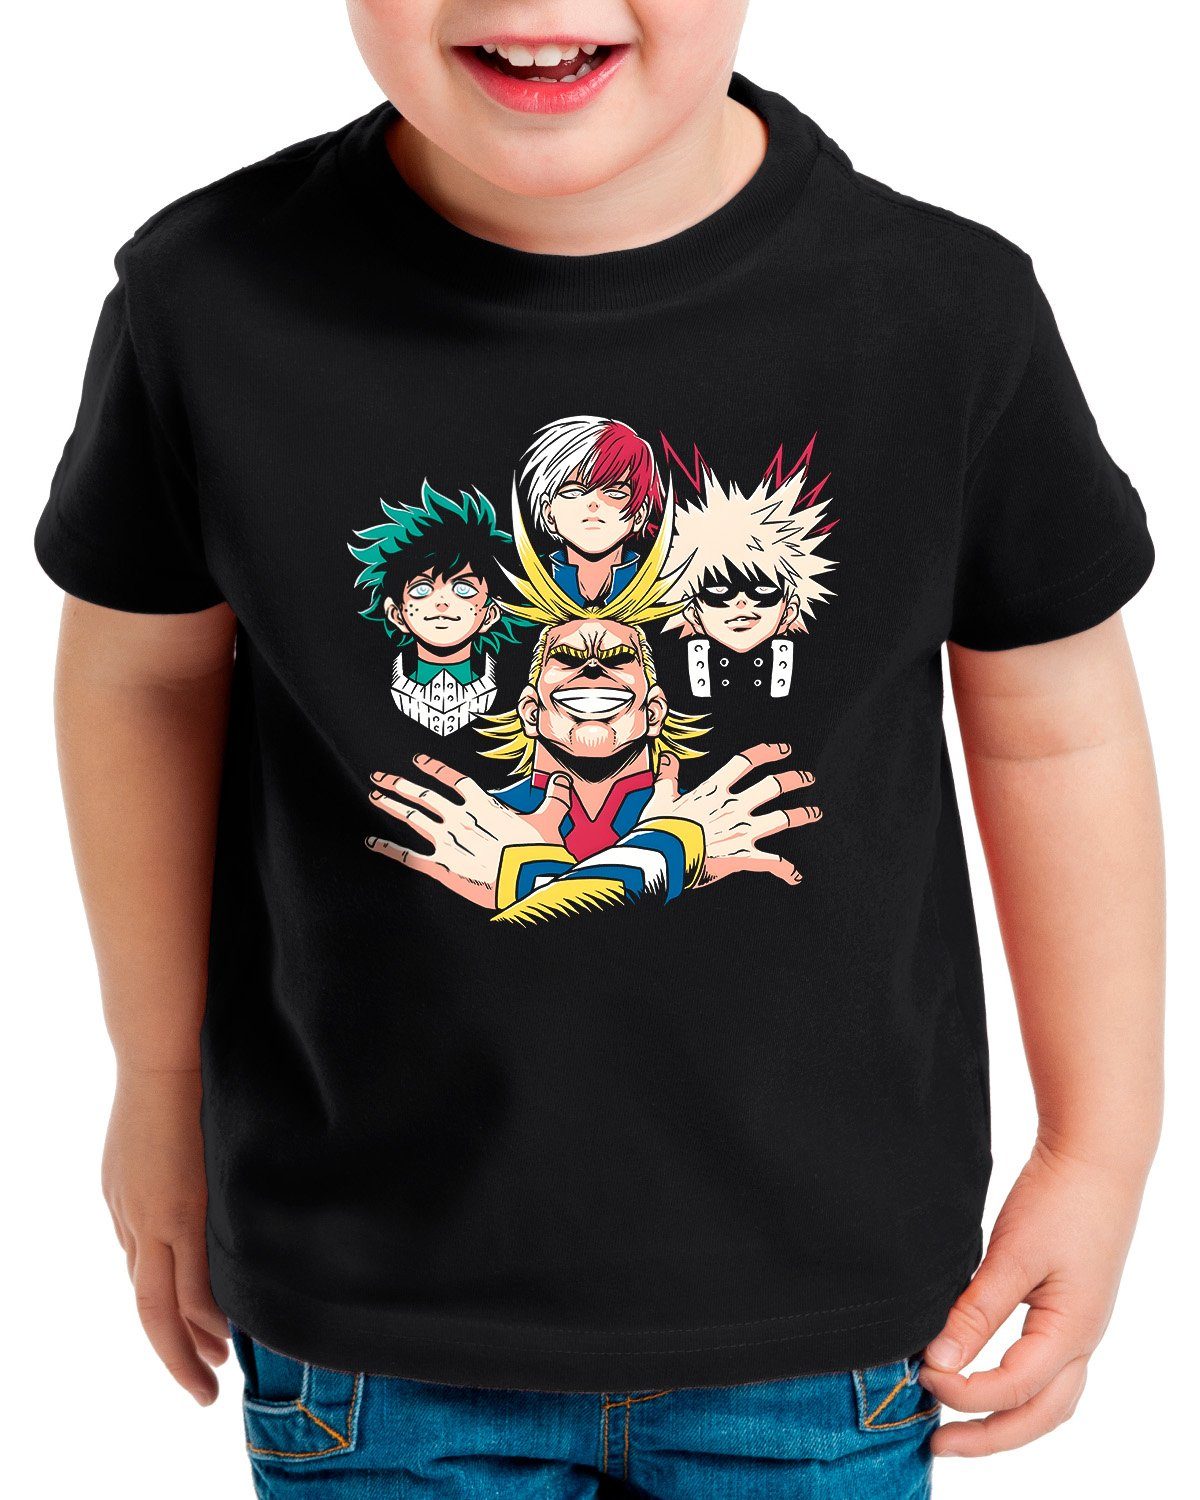 T-Shirt hero my cosplay Kinder anime style3 academia Print-Shirt manga Rhapsody Academia